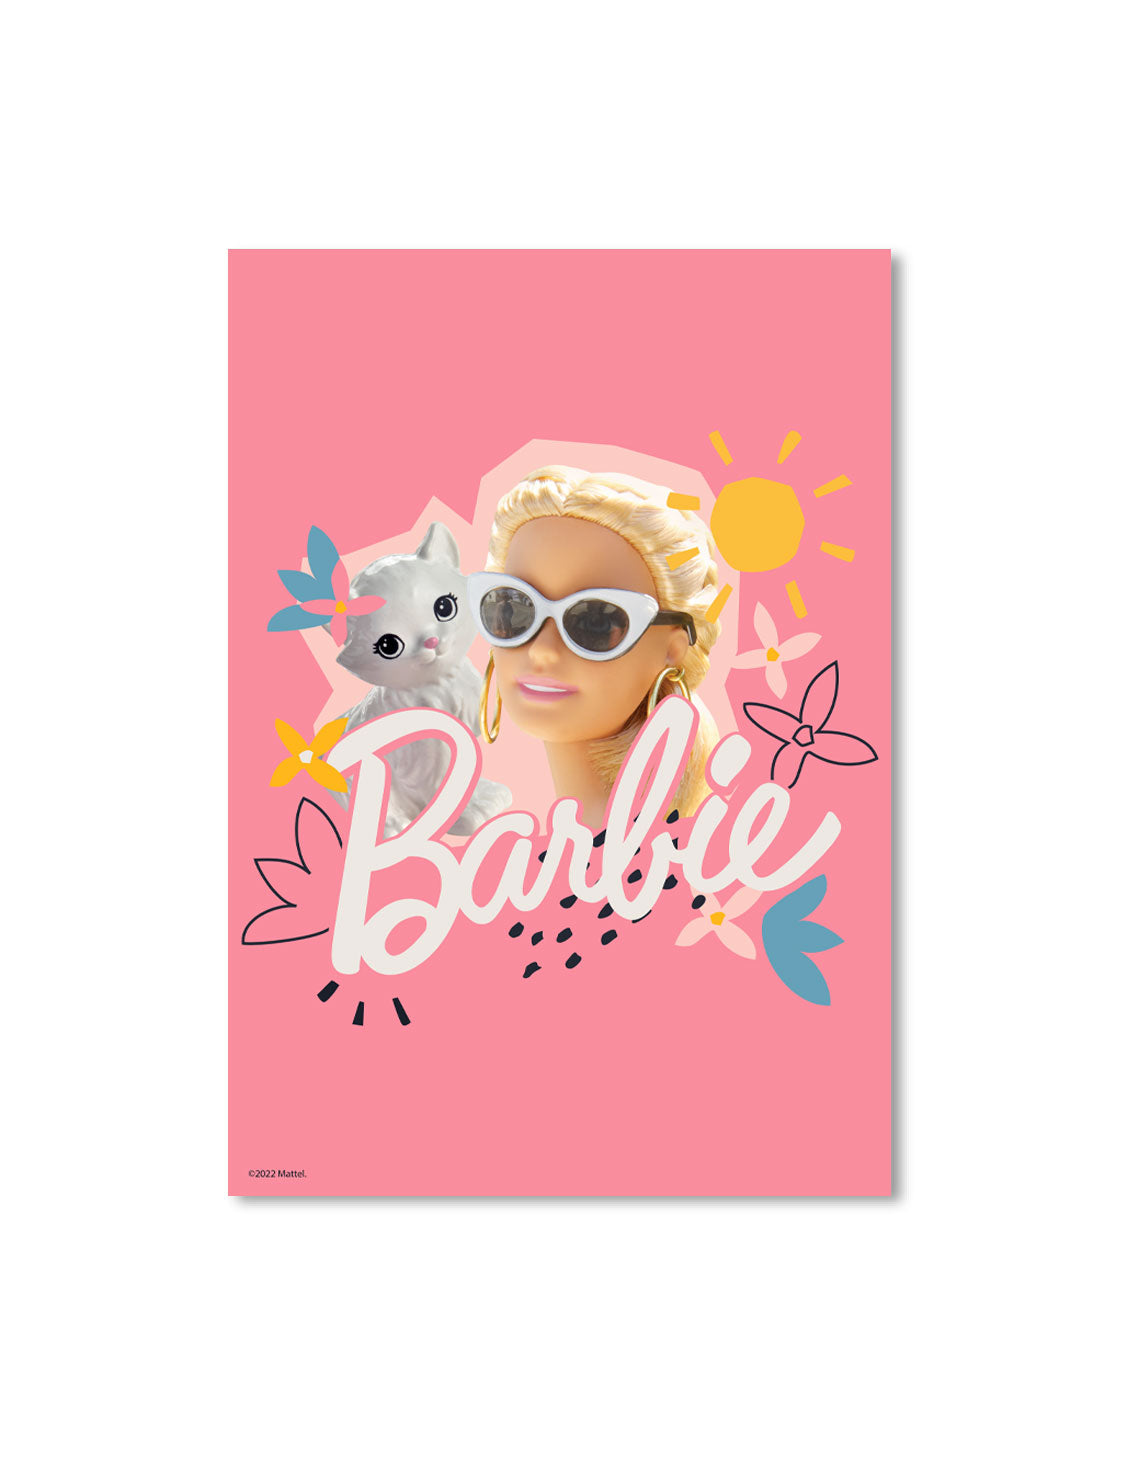 Barbie Collage Summer A3 Wall Art